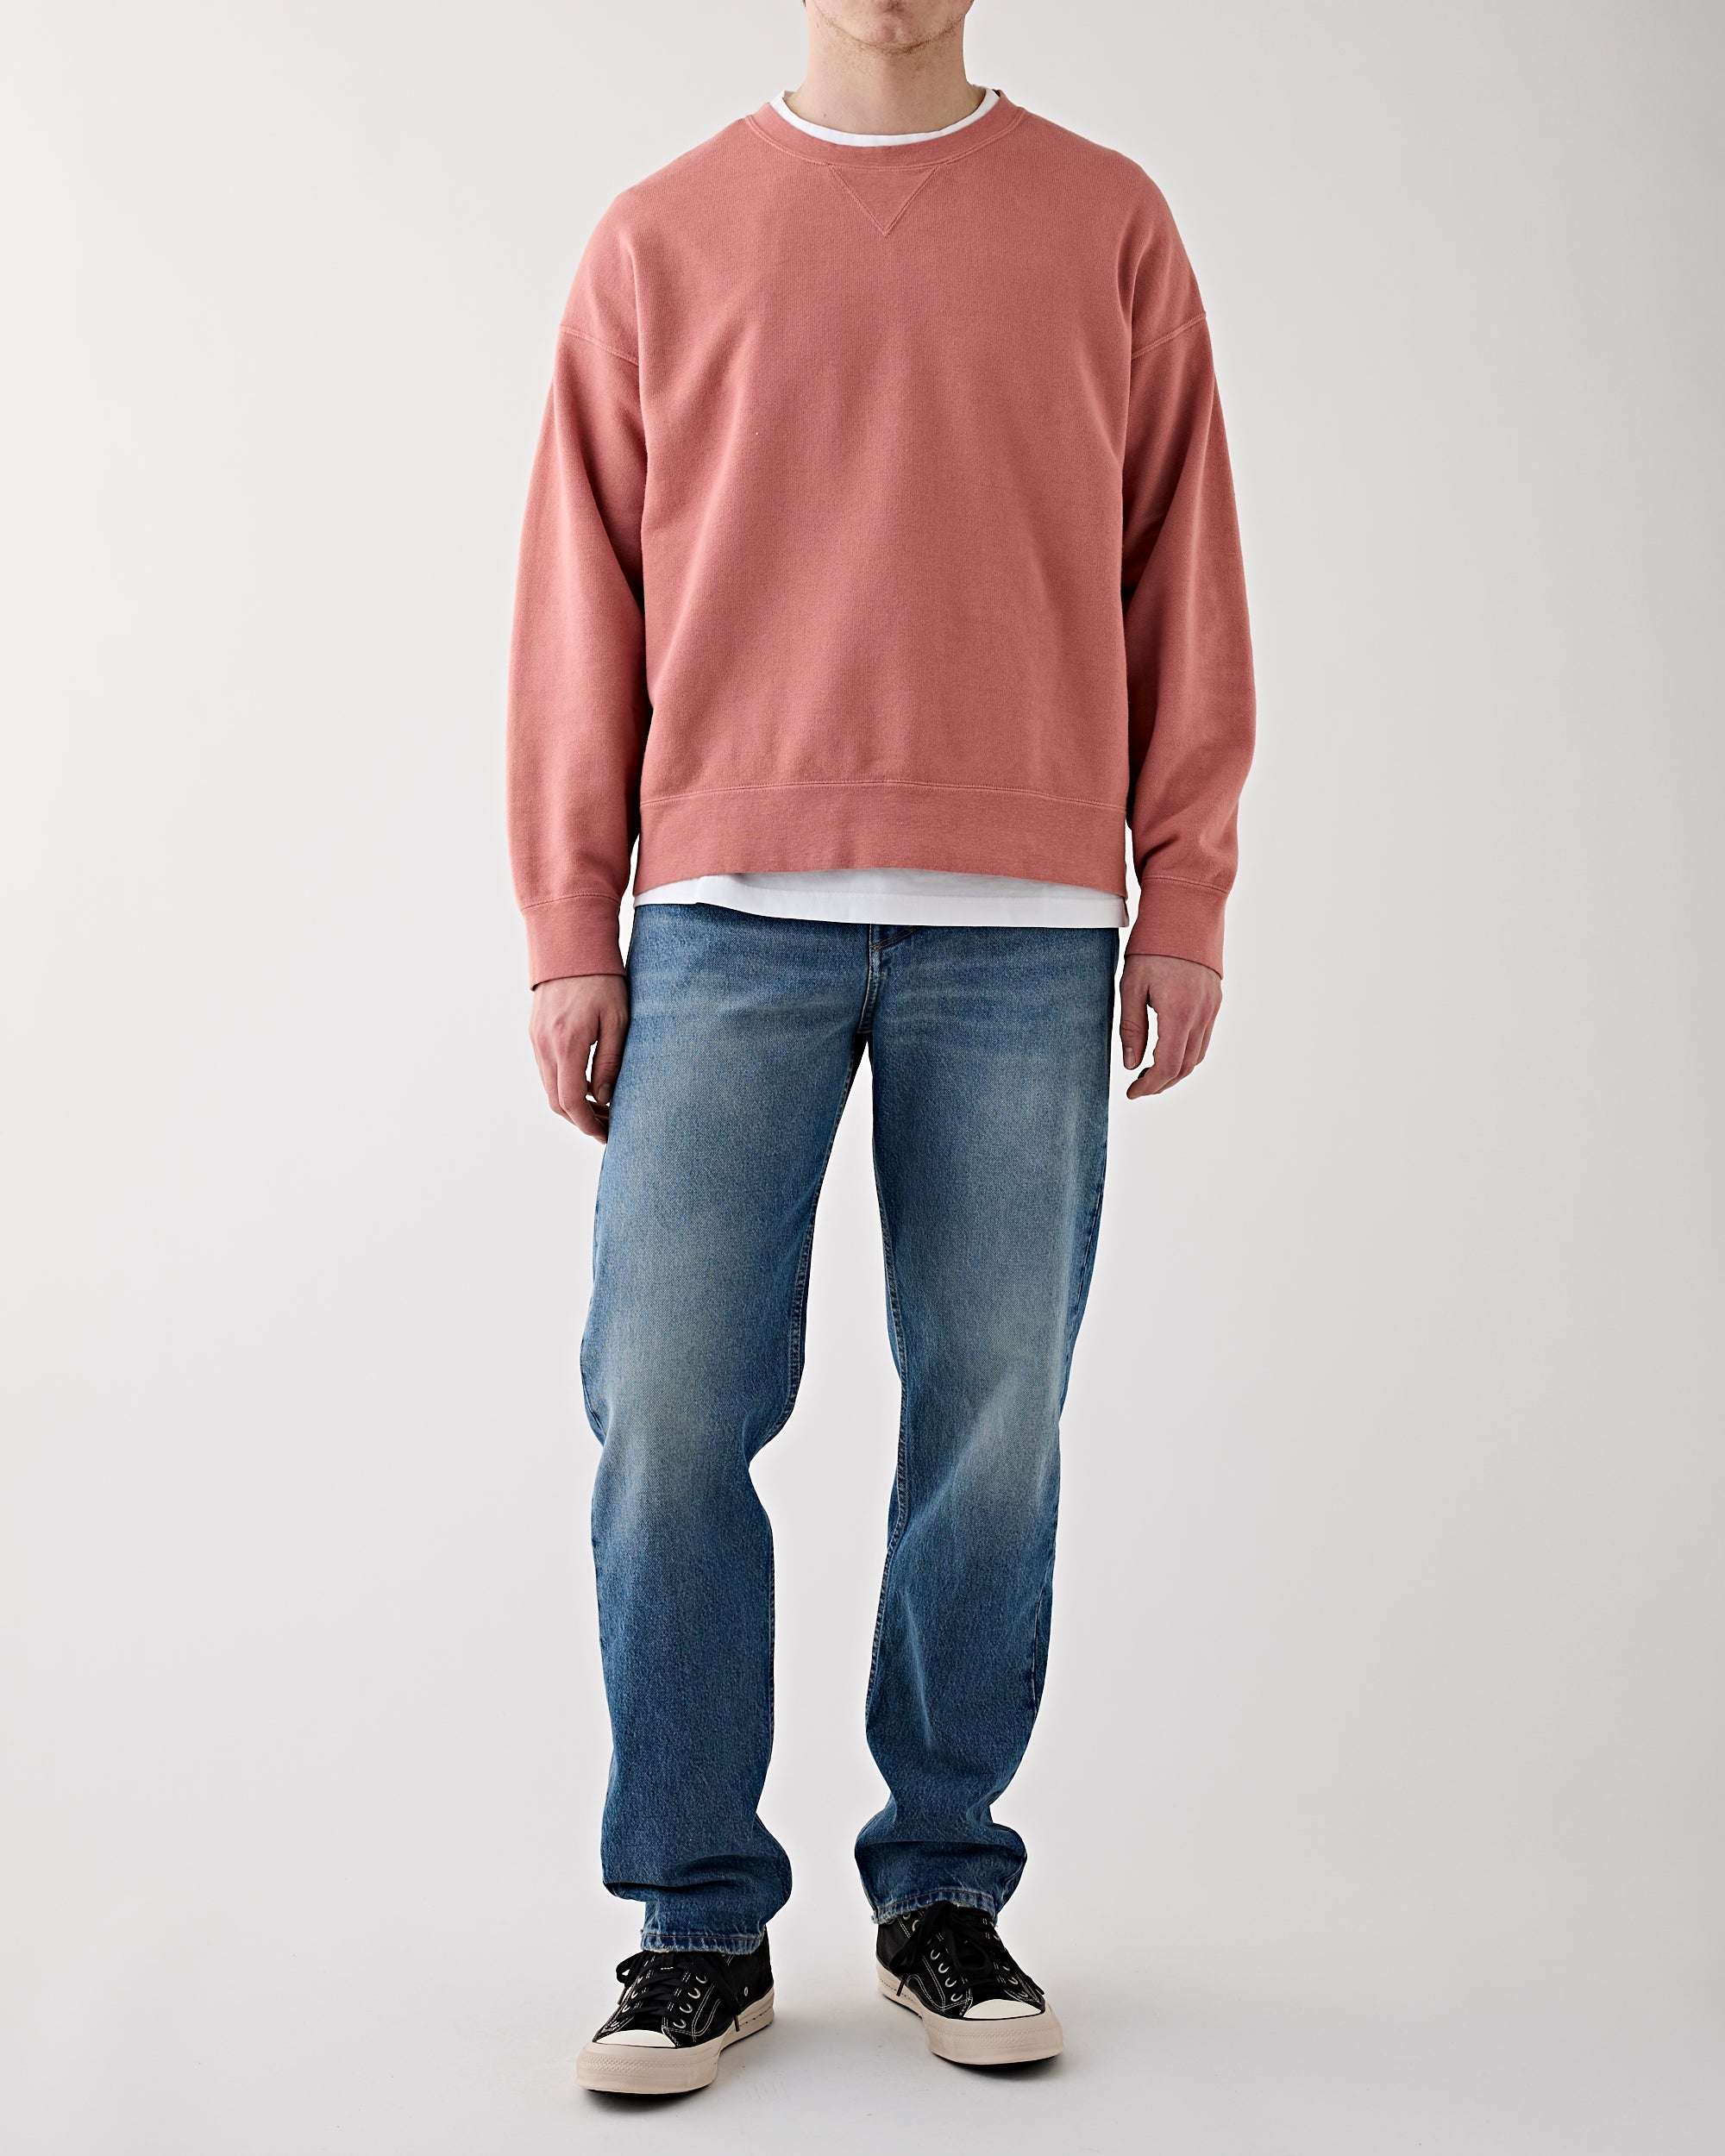 Visvim Jumbo SB Sweat L/S Damaged (U.D.) Pink Sweater Men